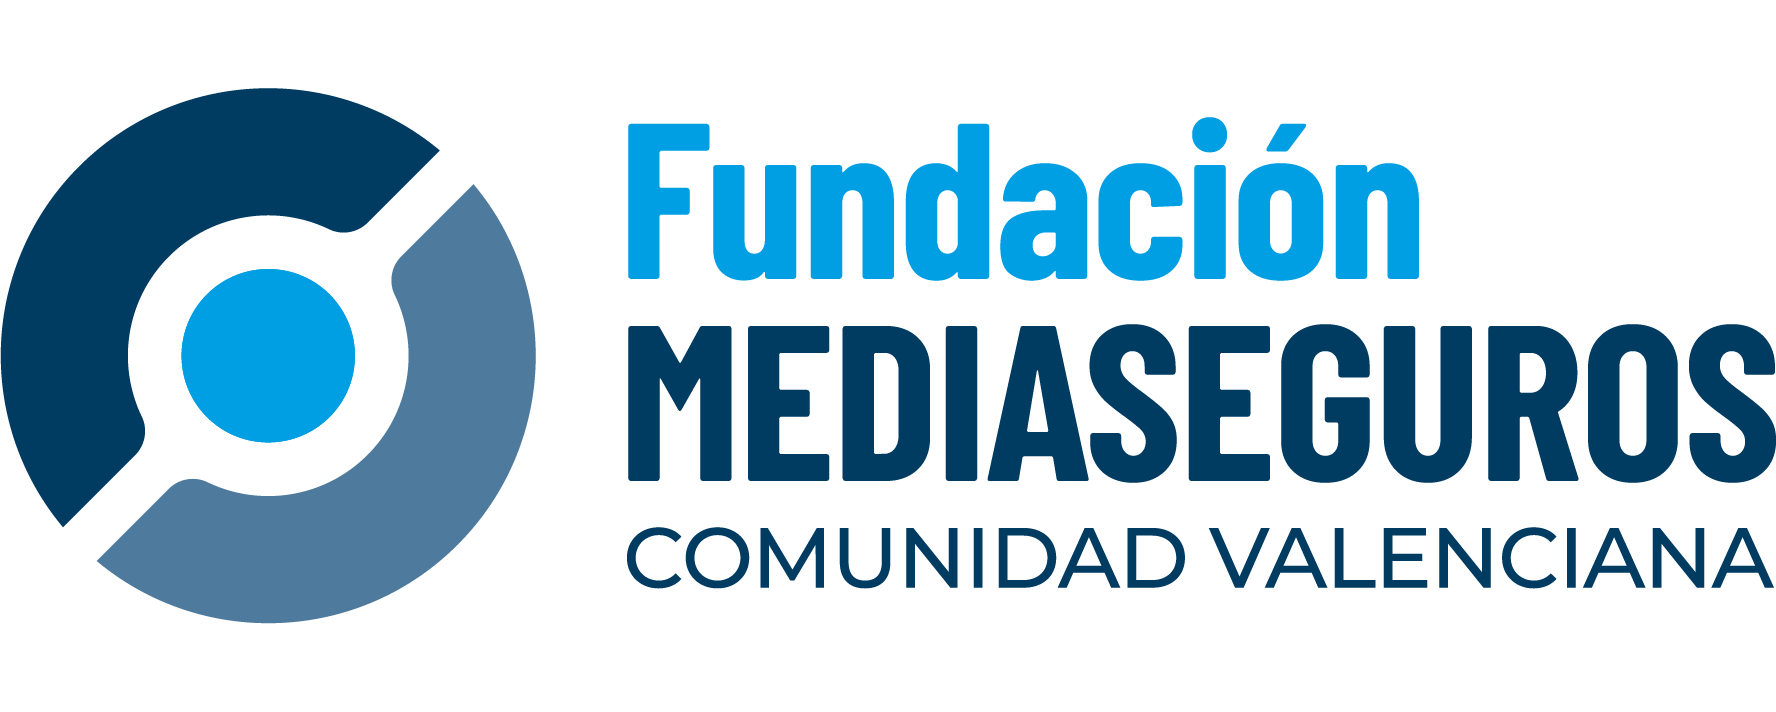 FundacionMediaseguros